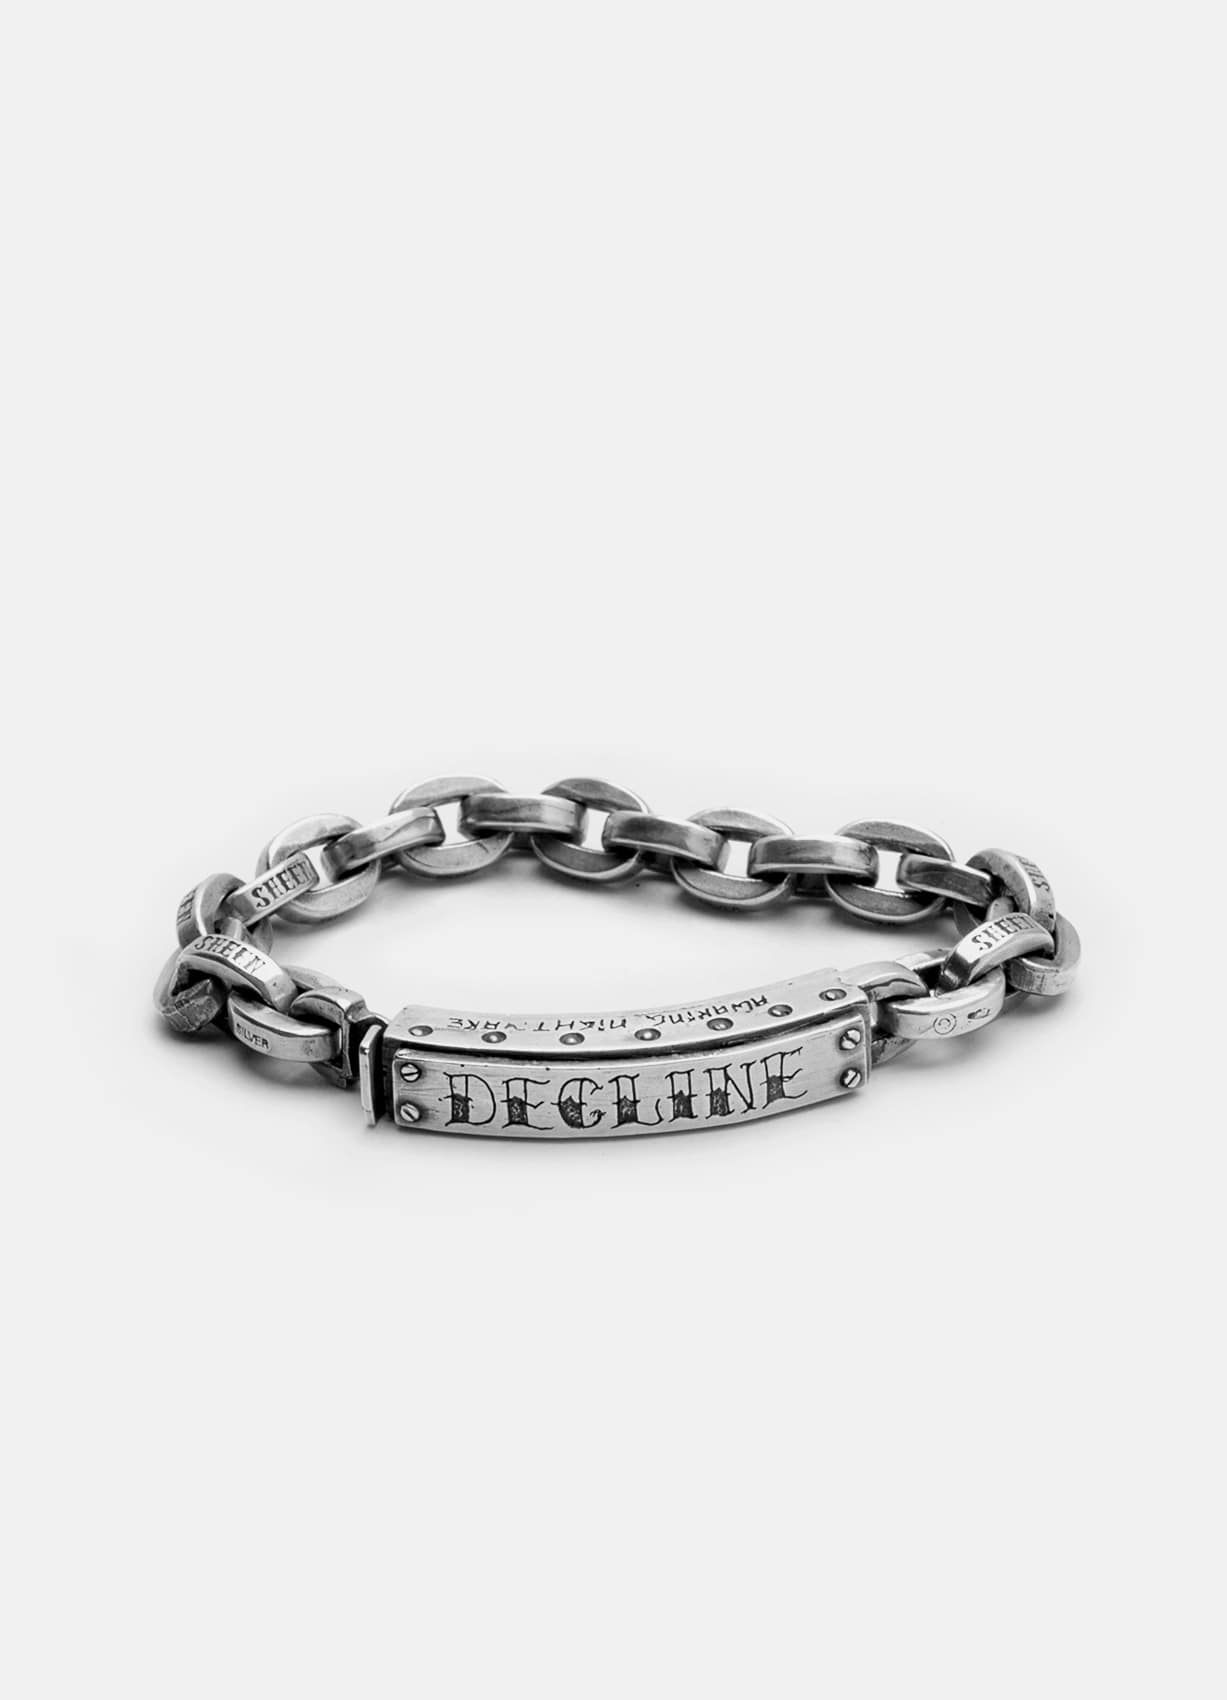 Decline 505 Silver Bracelet